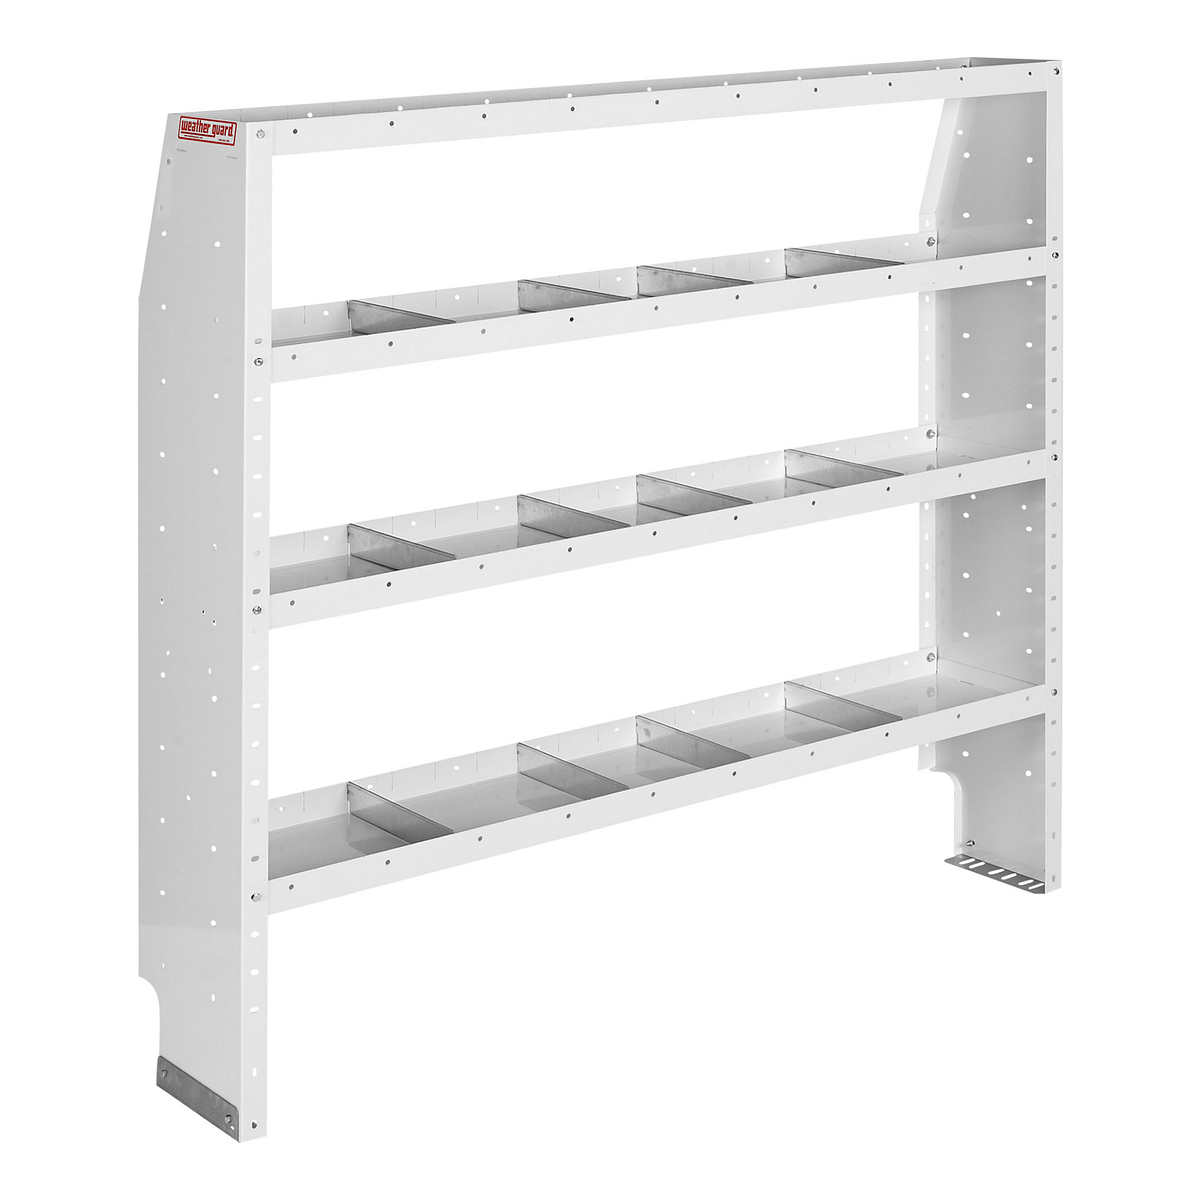 Adjustable 4 Shelf Unit - 60 in. x 60 in. x 13.5 in. Image